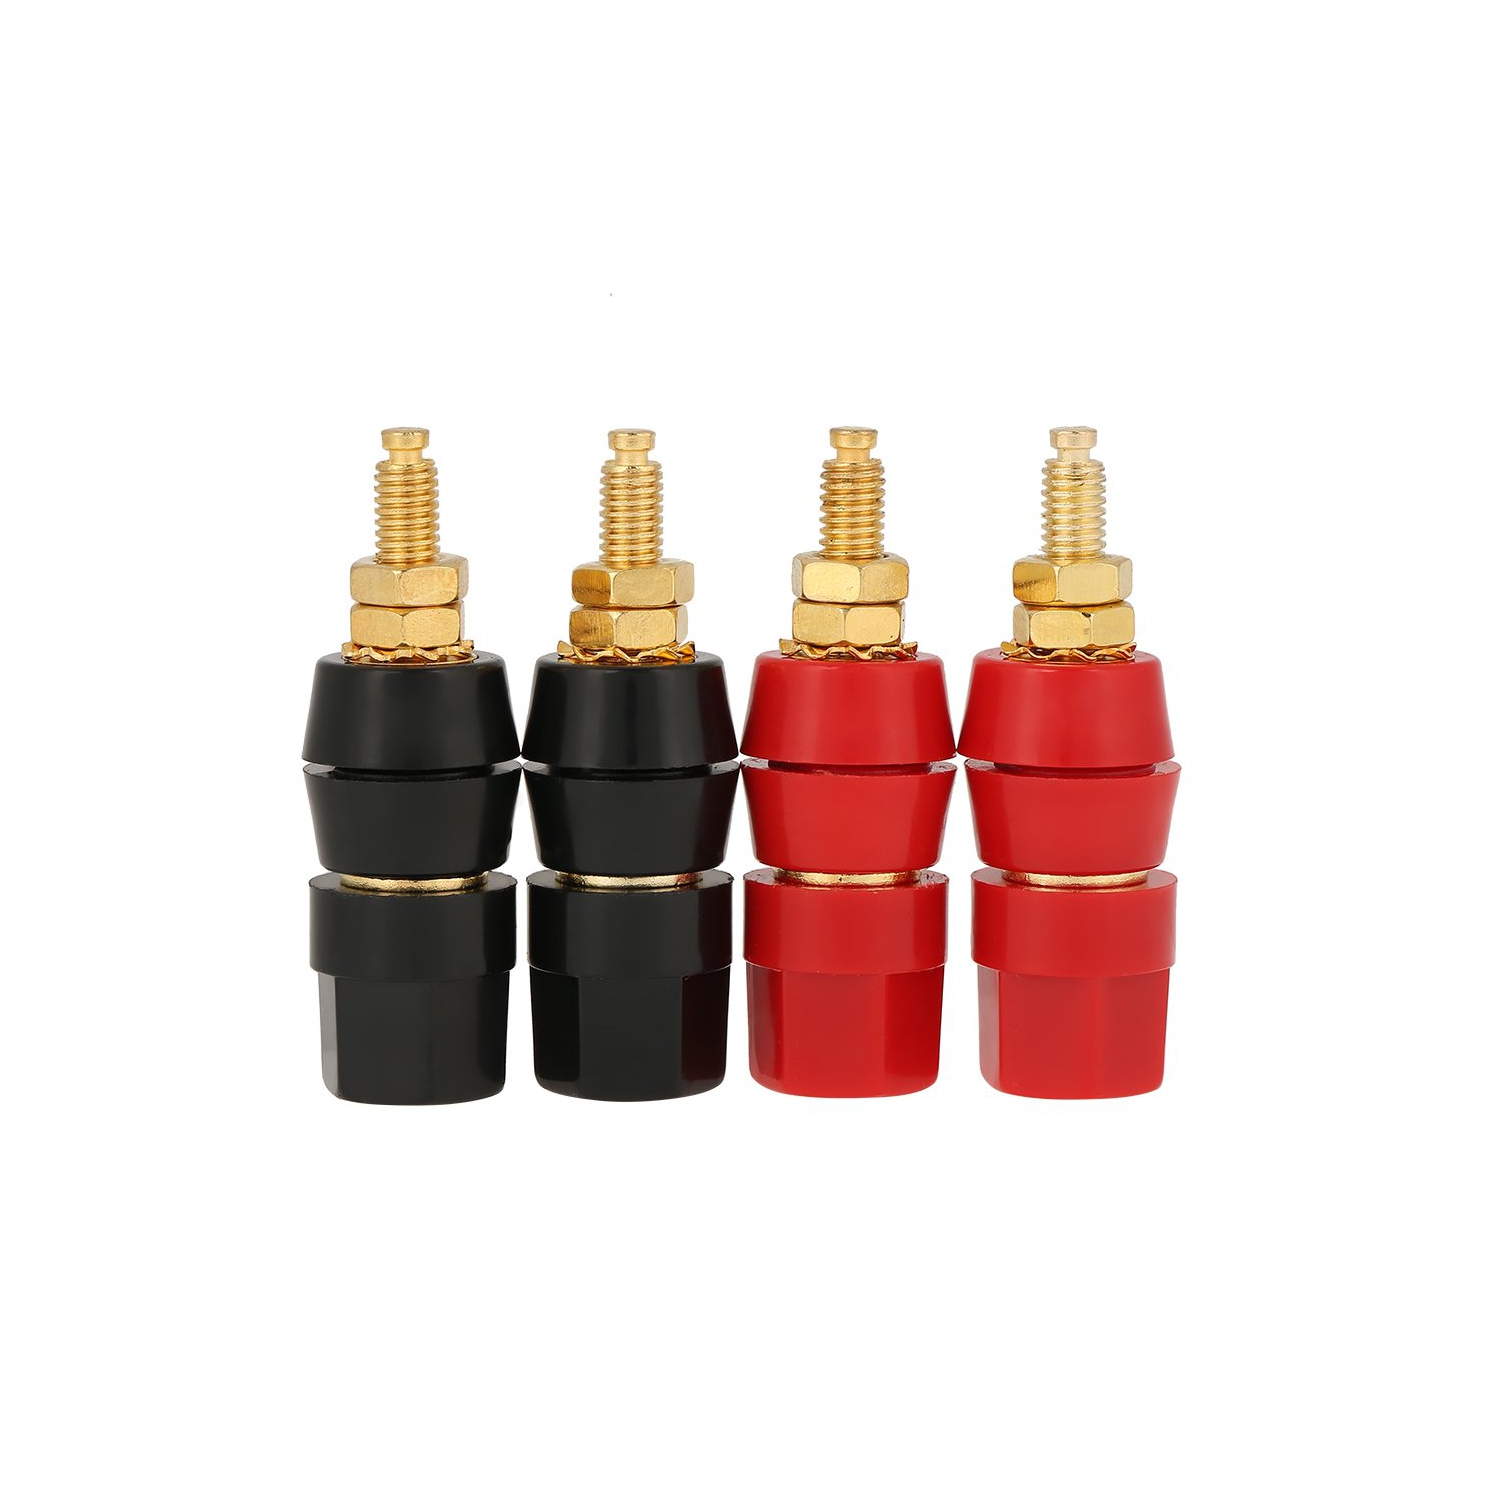 4 Pcs Banana Socket, Test Probe Audio Speaker Terminal Binding Post Banana Plug Socket Adapter Connector, 4mm Panel Mount Banana Socket, Black and Red